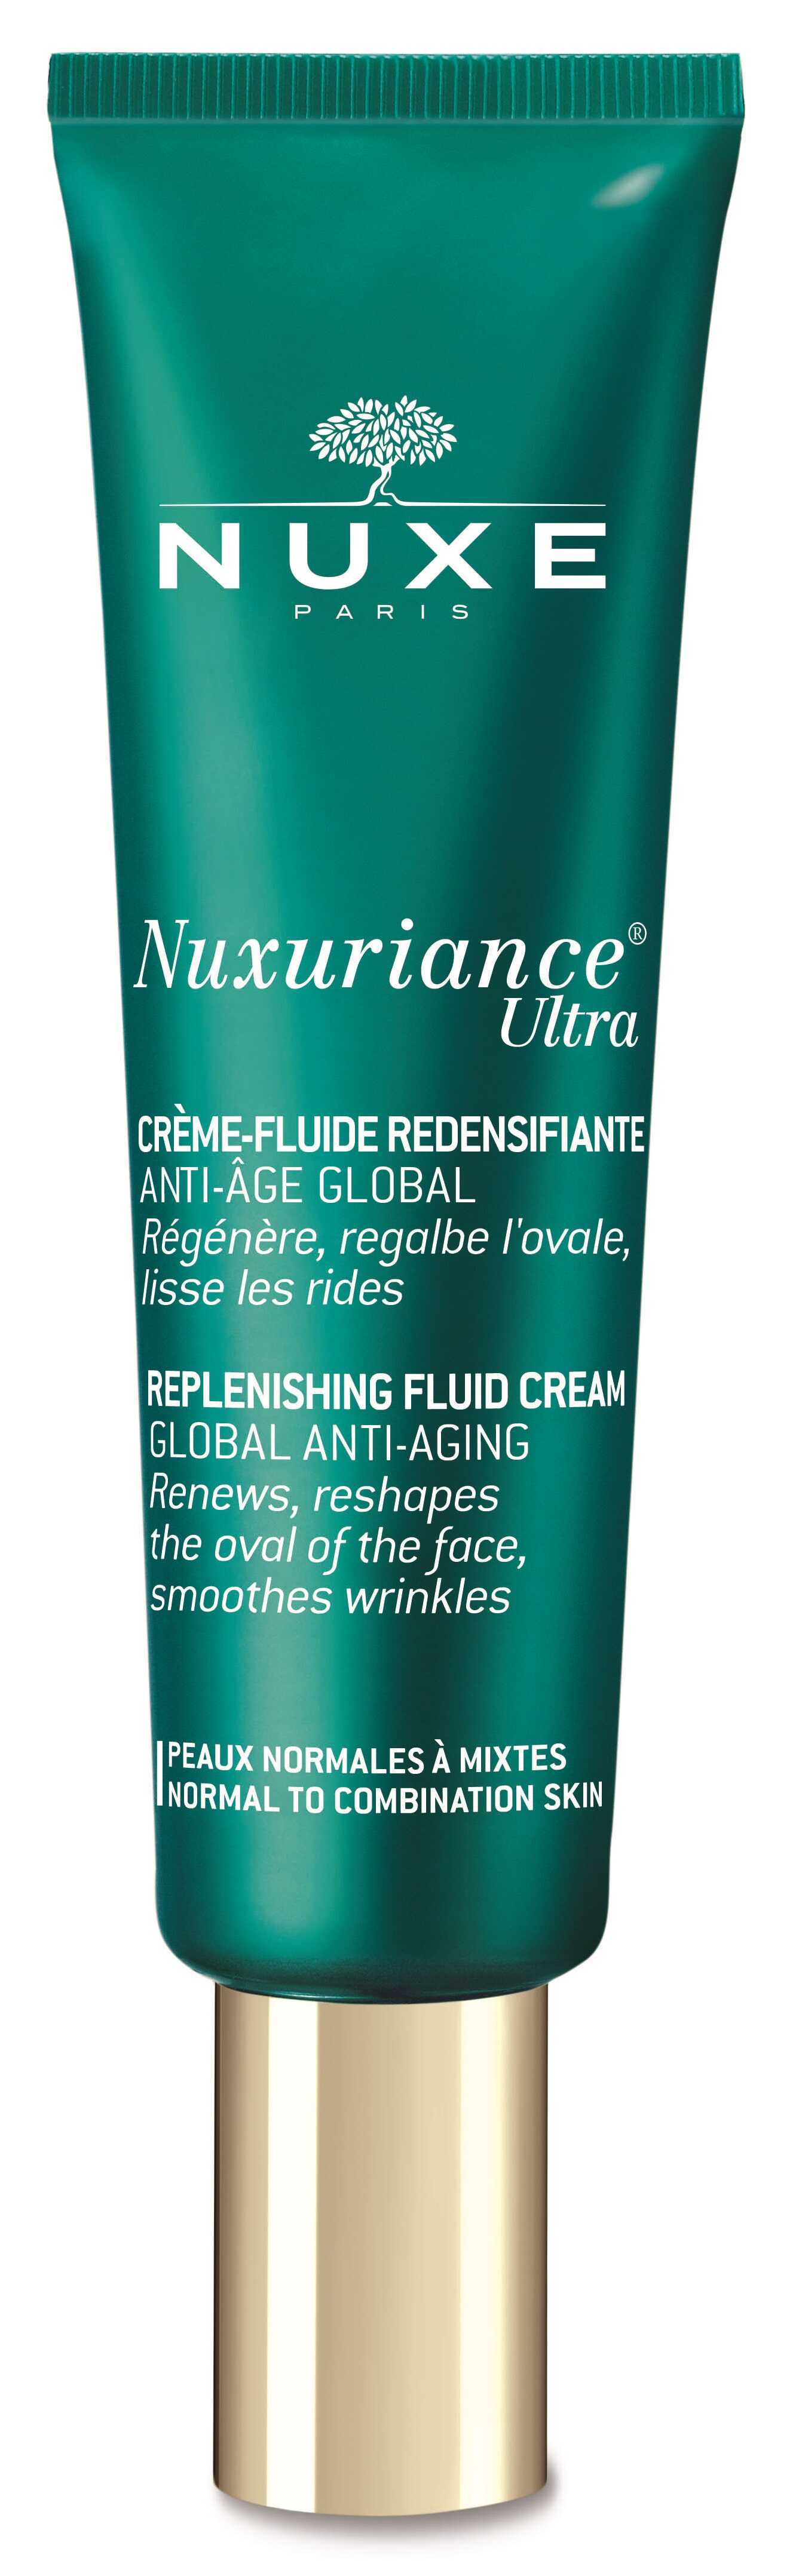 NUXE Nuxuriance Ultra teljeskörű anti-aging feltöltő fluid 50 ml